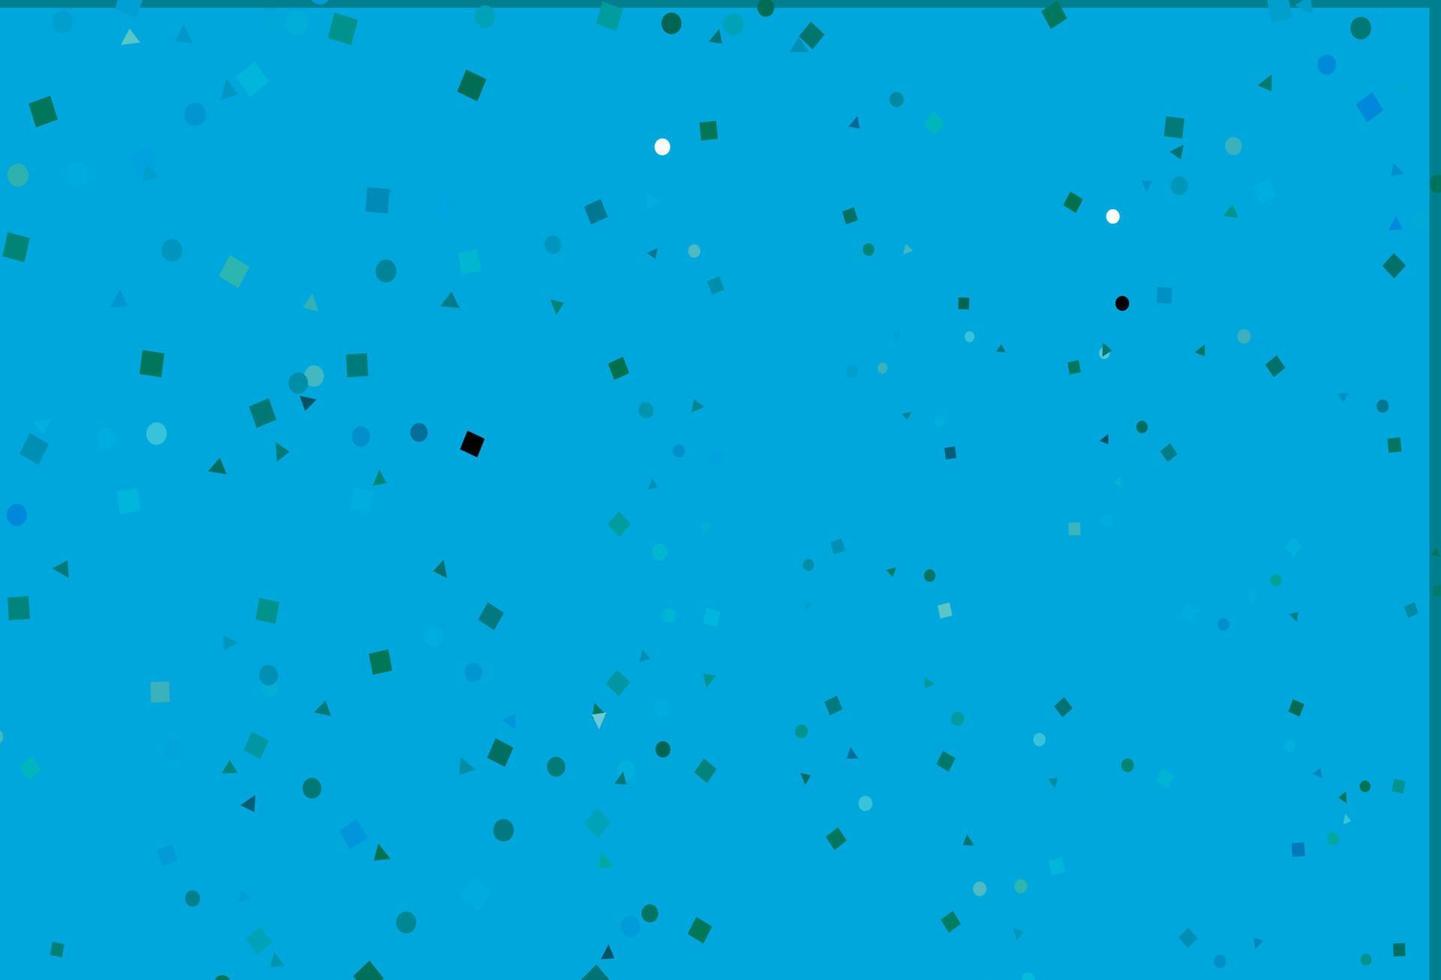 hellblaue, grüne Vektorvorlage mit Kristallen, Kreisen, Quadraten. vektor